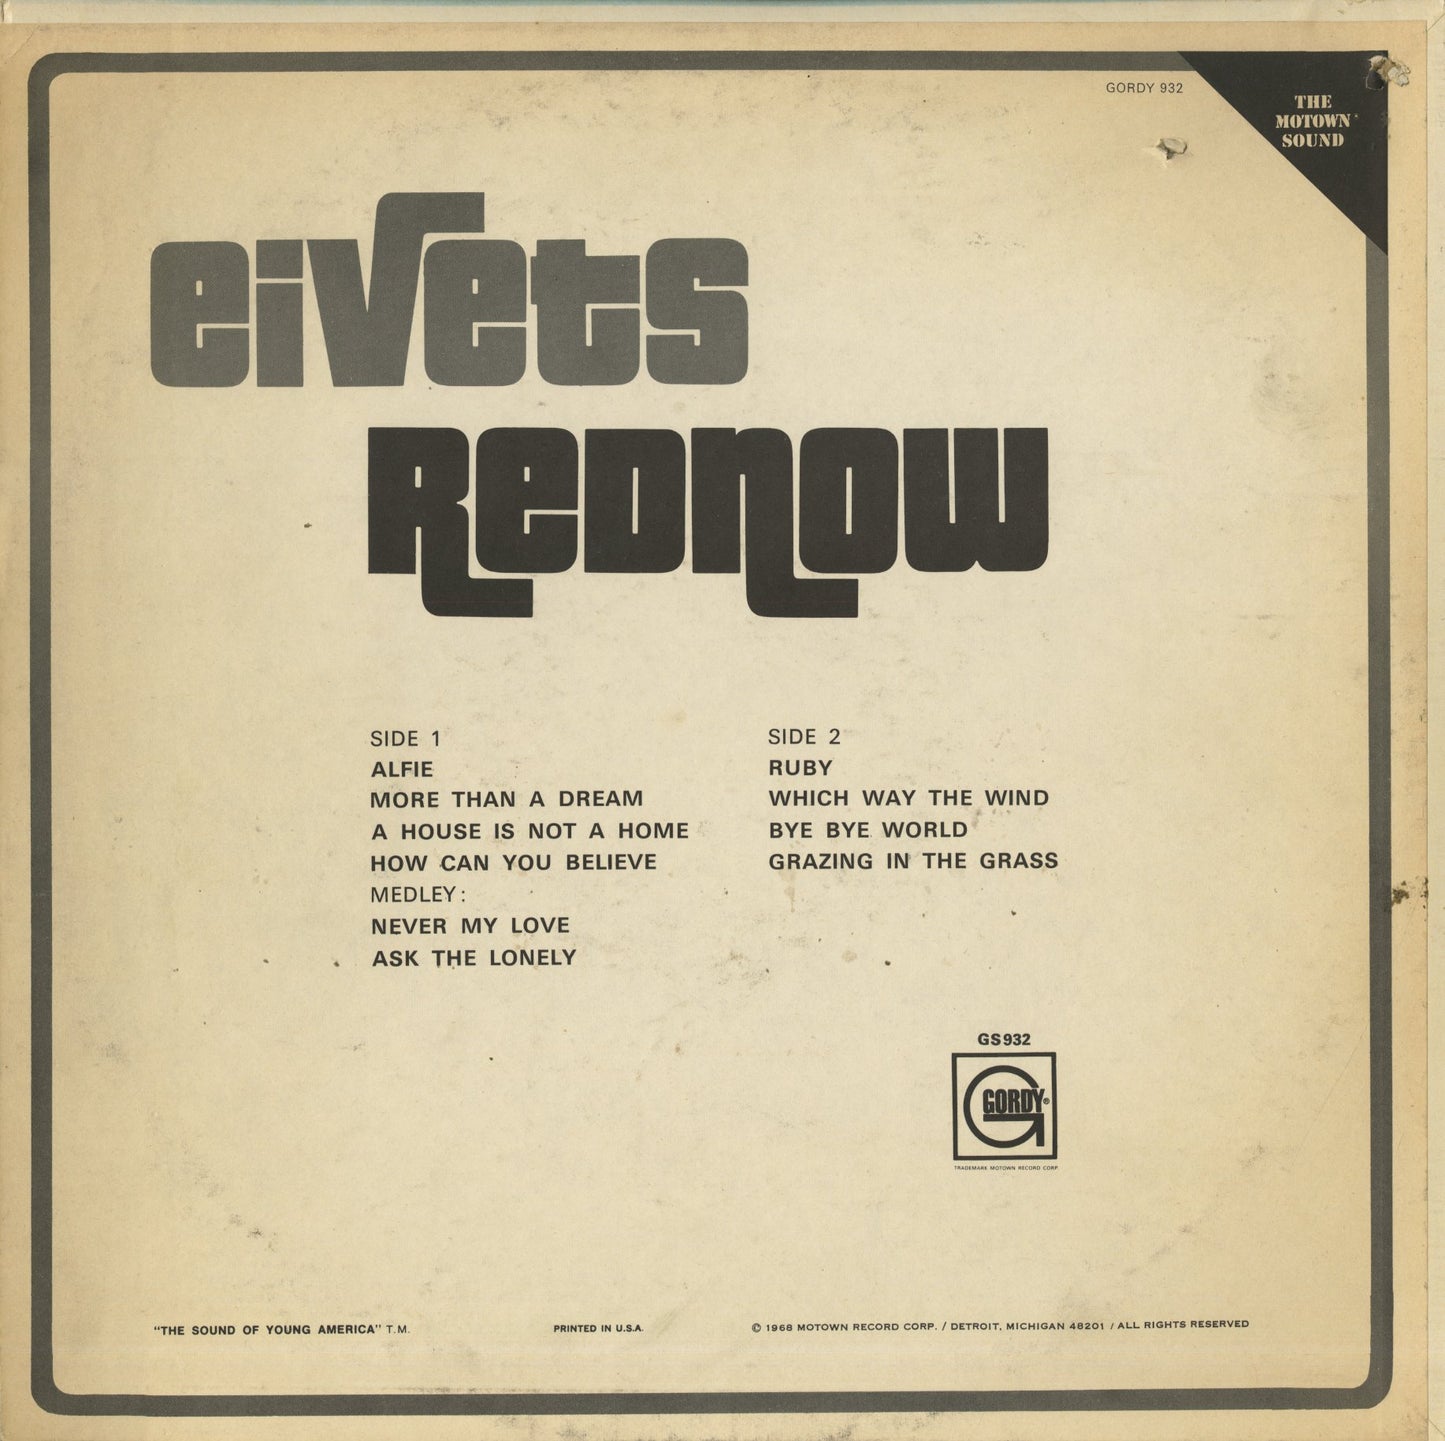 Eivets Rednow / イーヴェッツ・レッドナウ / Eivets Rednow (FLPS932)